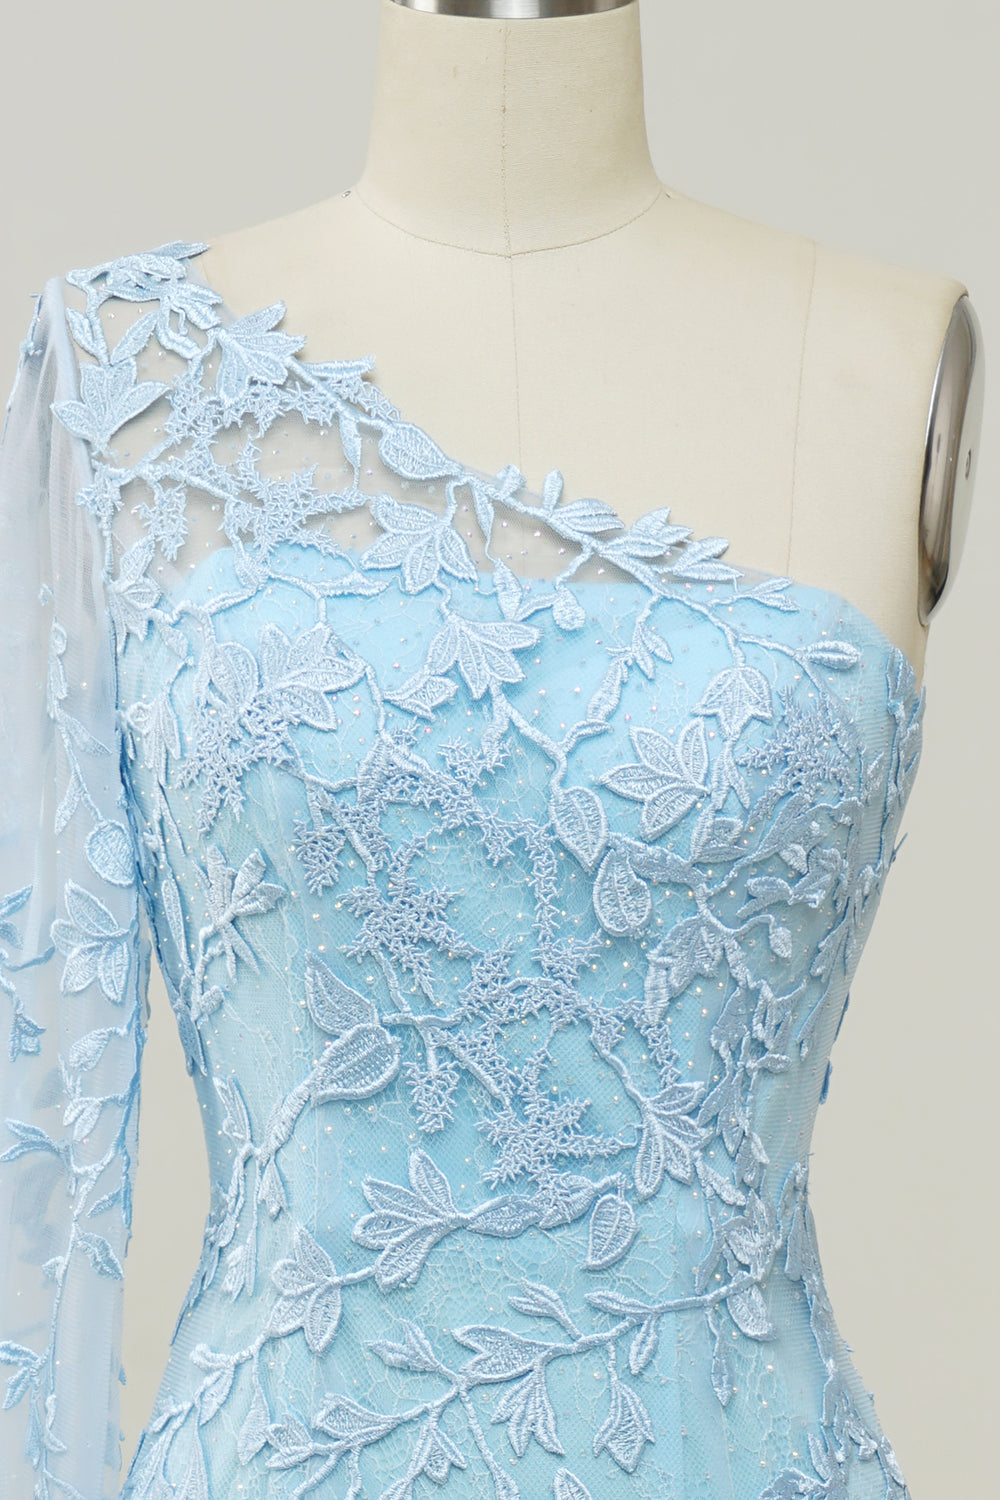 One-Shoulder Sky Blue Mermaid Prom Dress